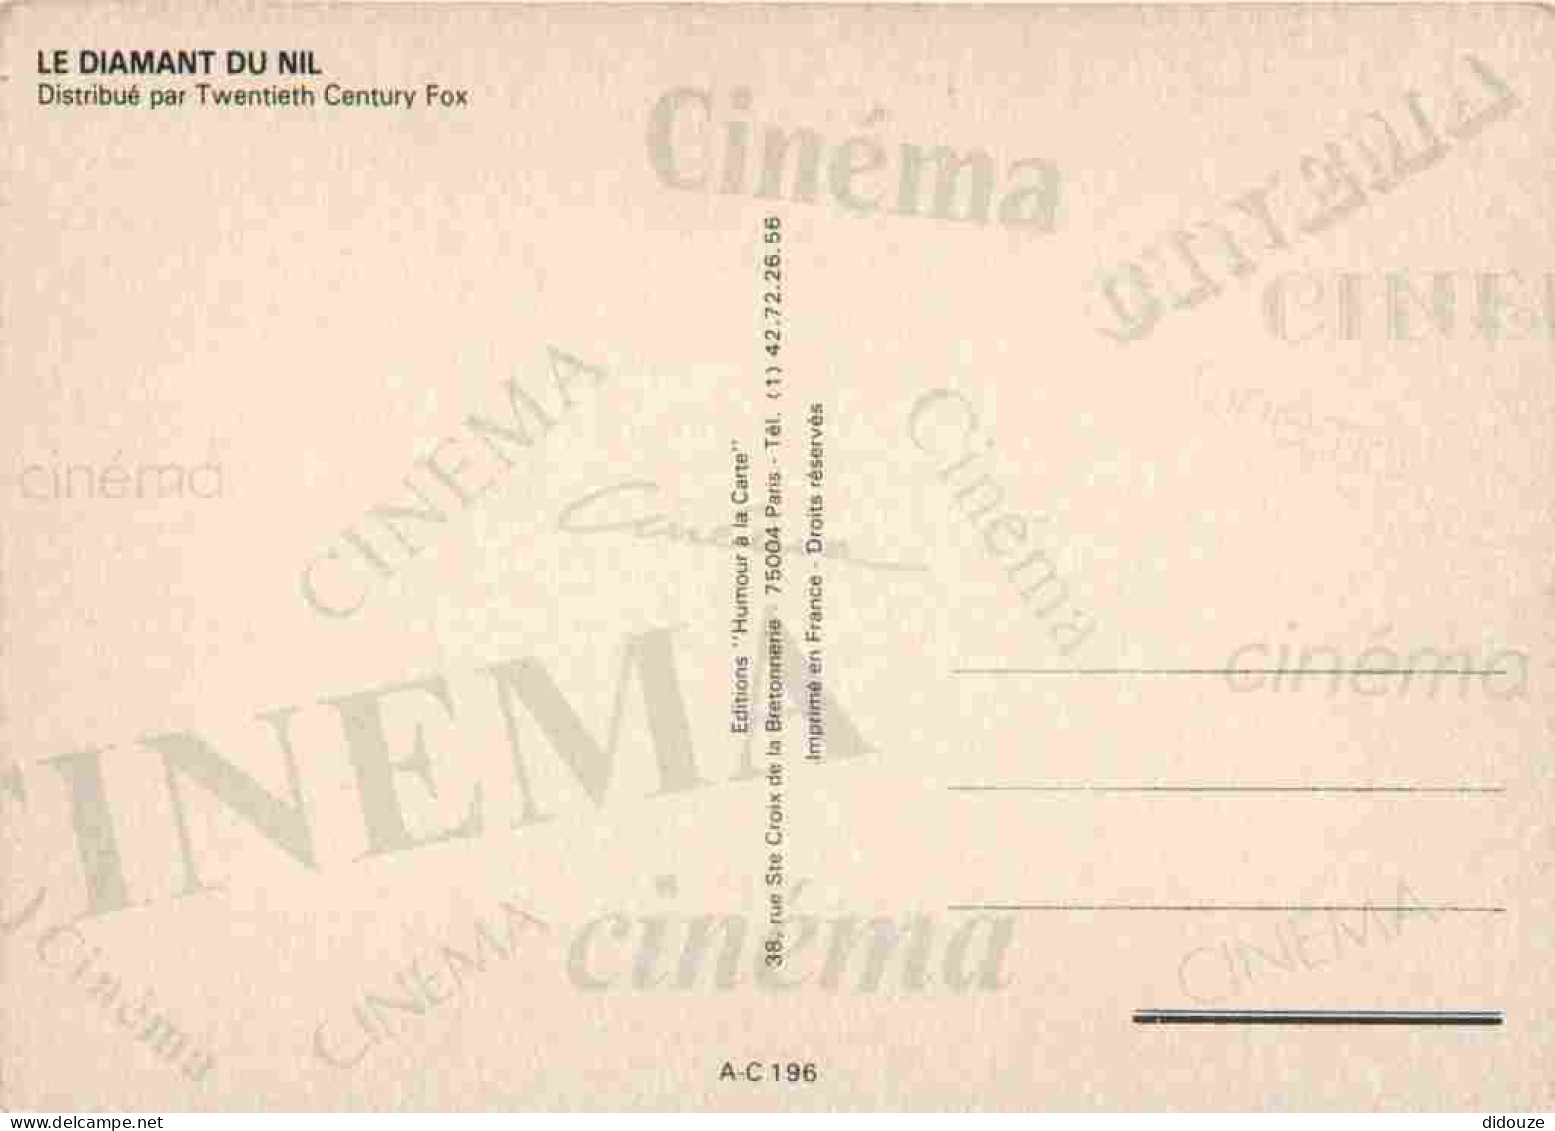 Cinema - Affiche De Film - Le Diamant Du Nil - Michael Douglas - Kathleen Turner - Danny DeVito - CPM - Carte Neuve - Vo - Plakate Auf Karten